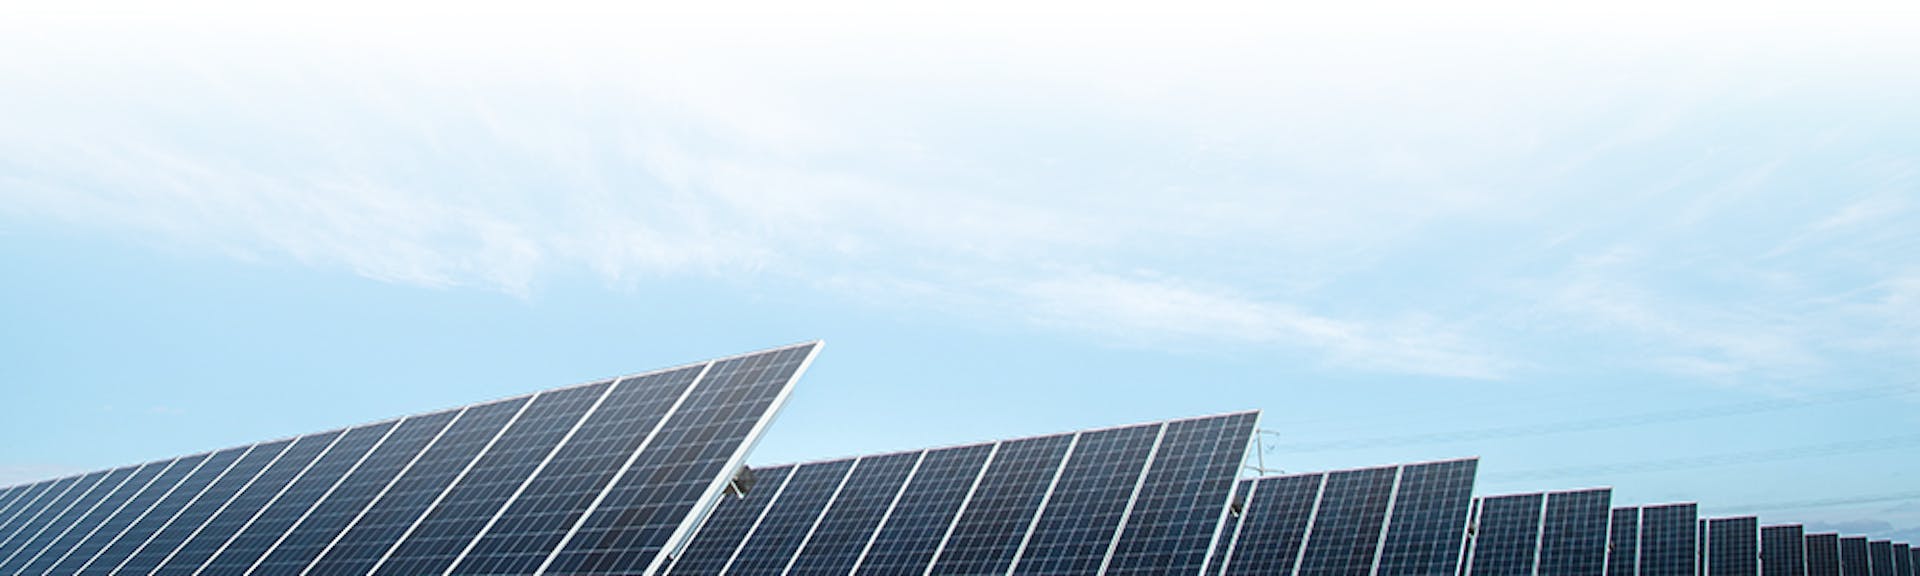 Sustainability - Energy sources - Solar grid